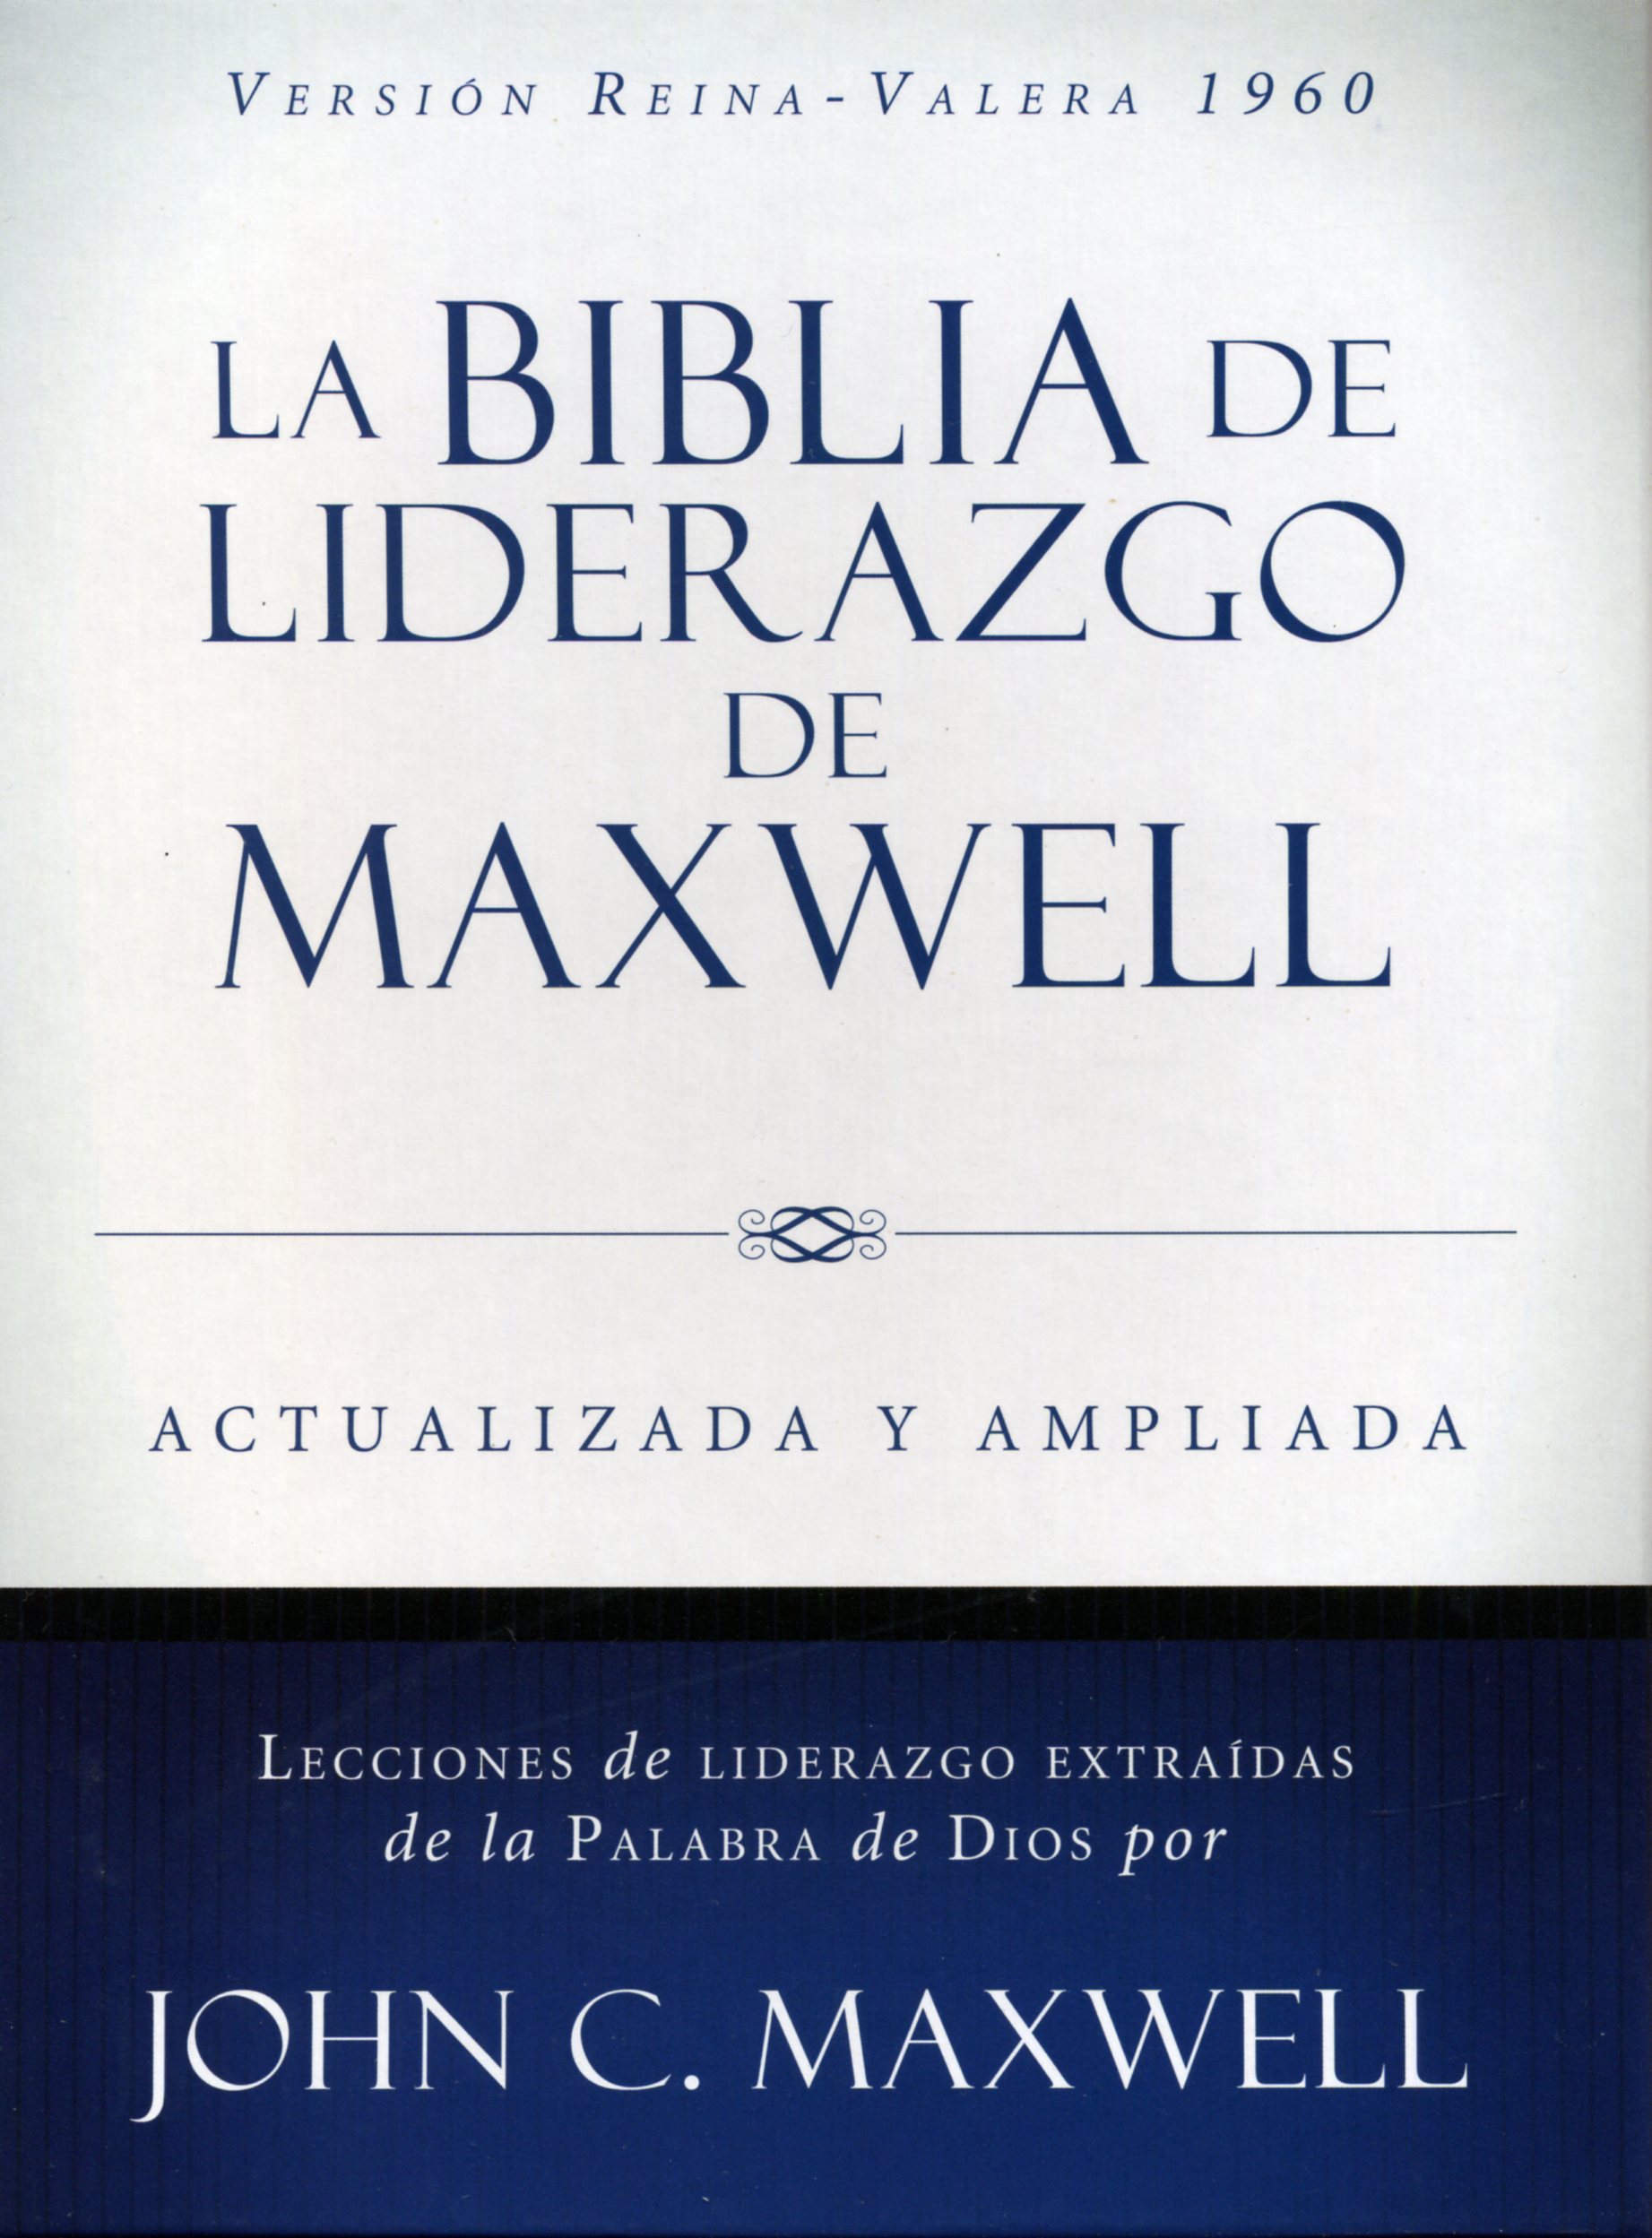 Biblia del Liderazgo Maxwell RVR 60 Piel Marron